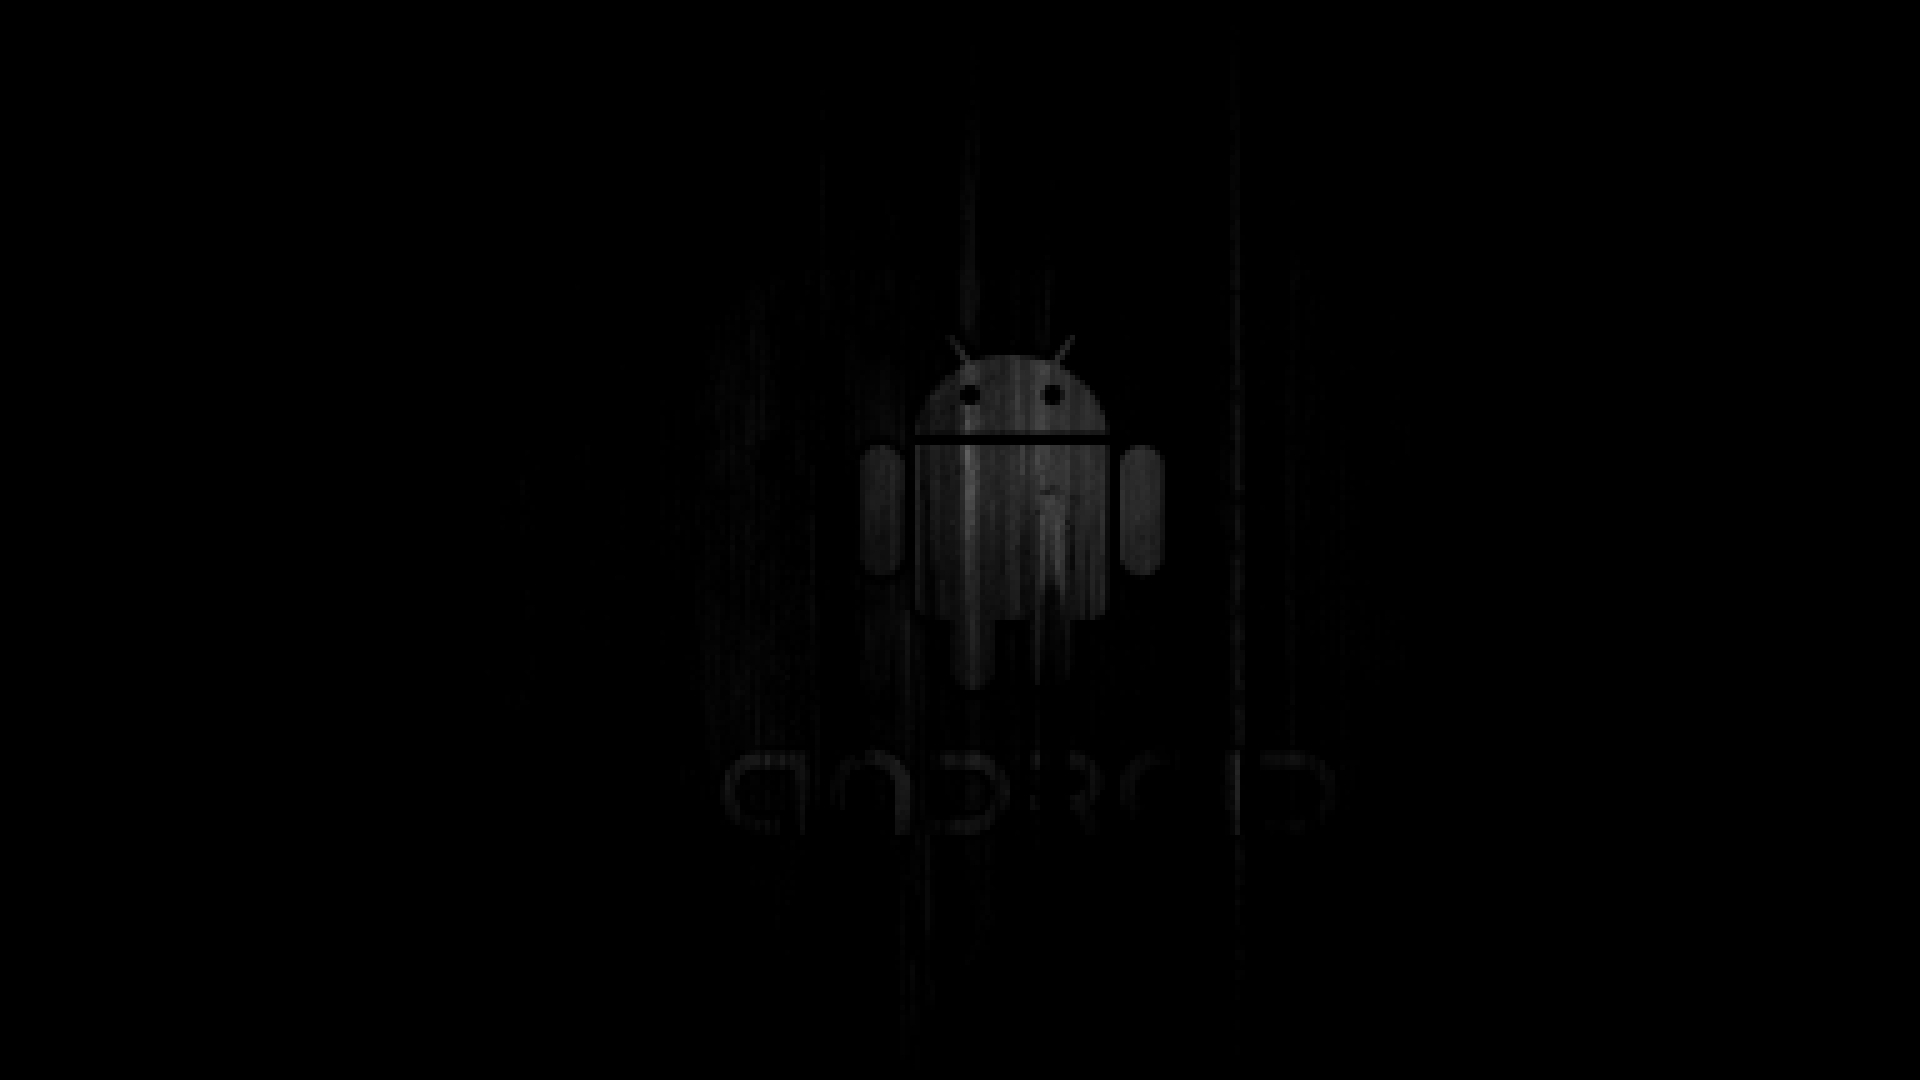 обои android Картинки Заставки android logo black and white background hd w...